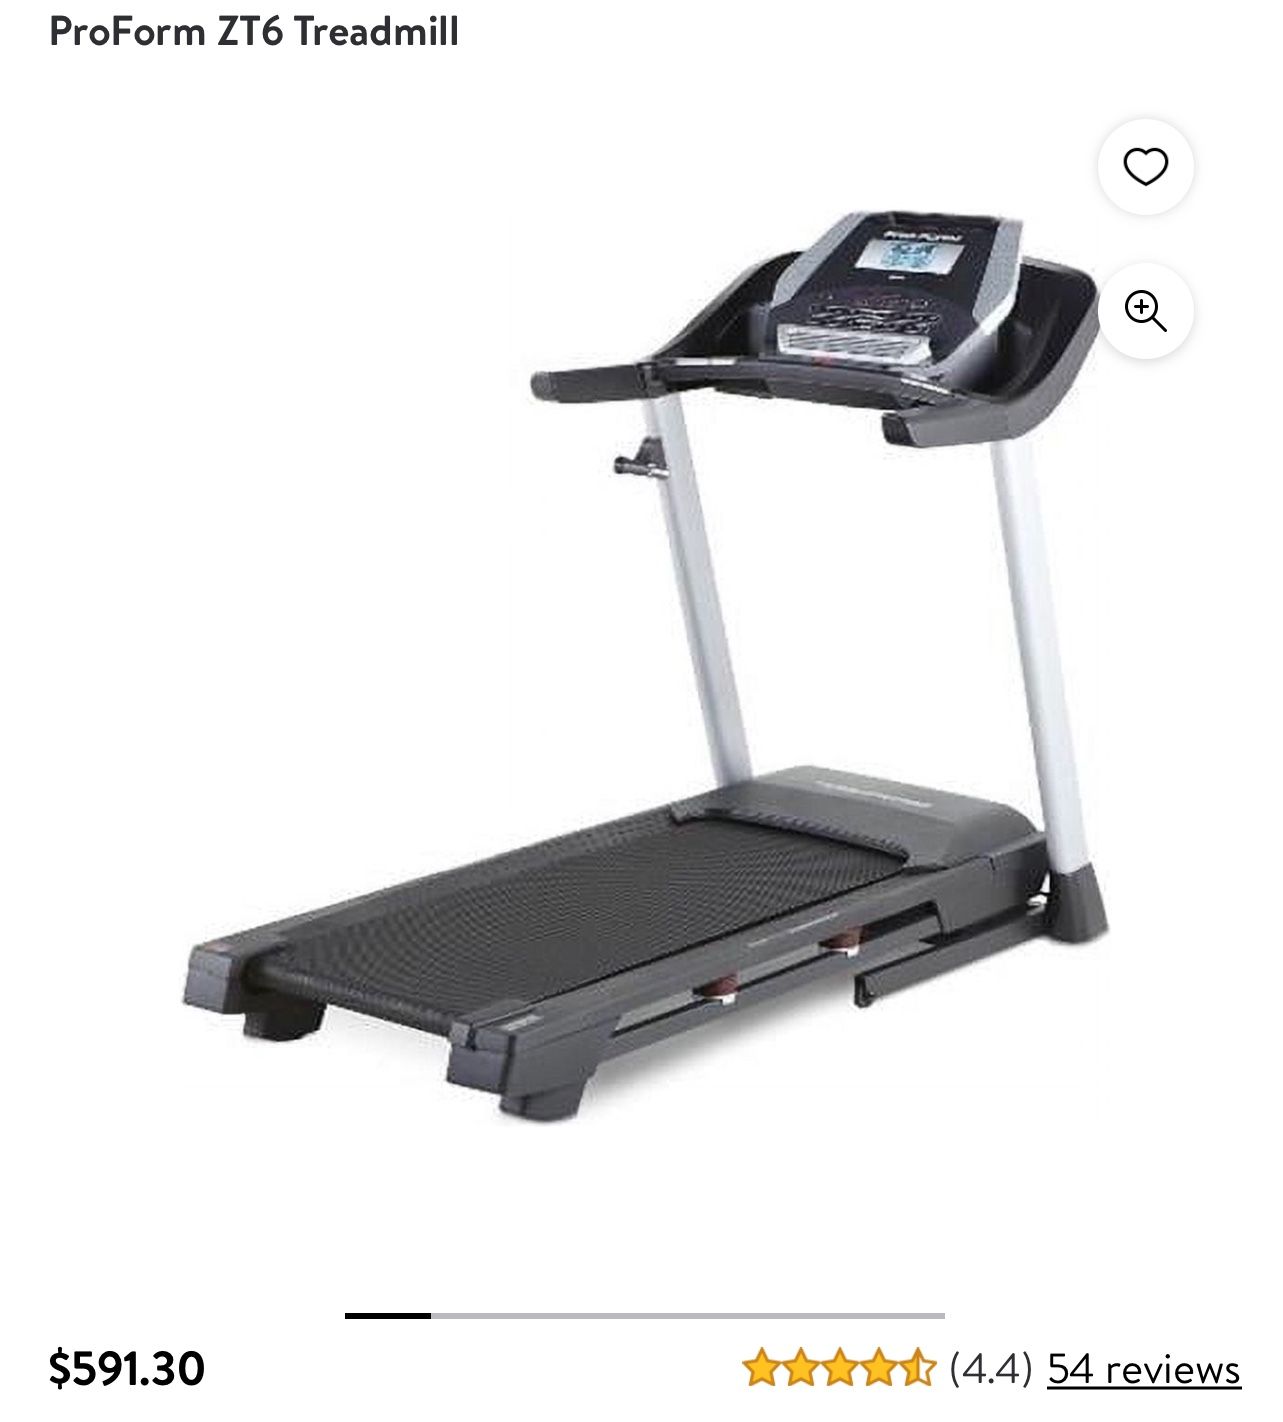 treadmill zt6 model no. pftl59014.1